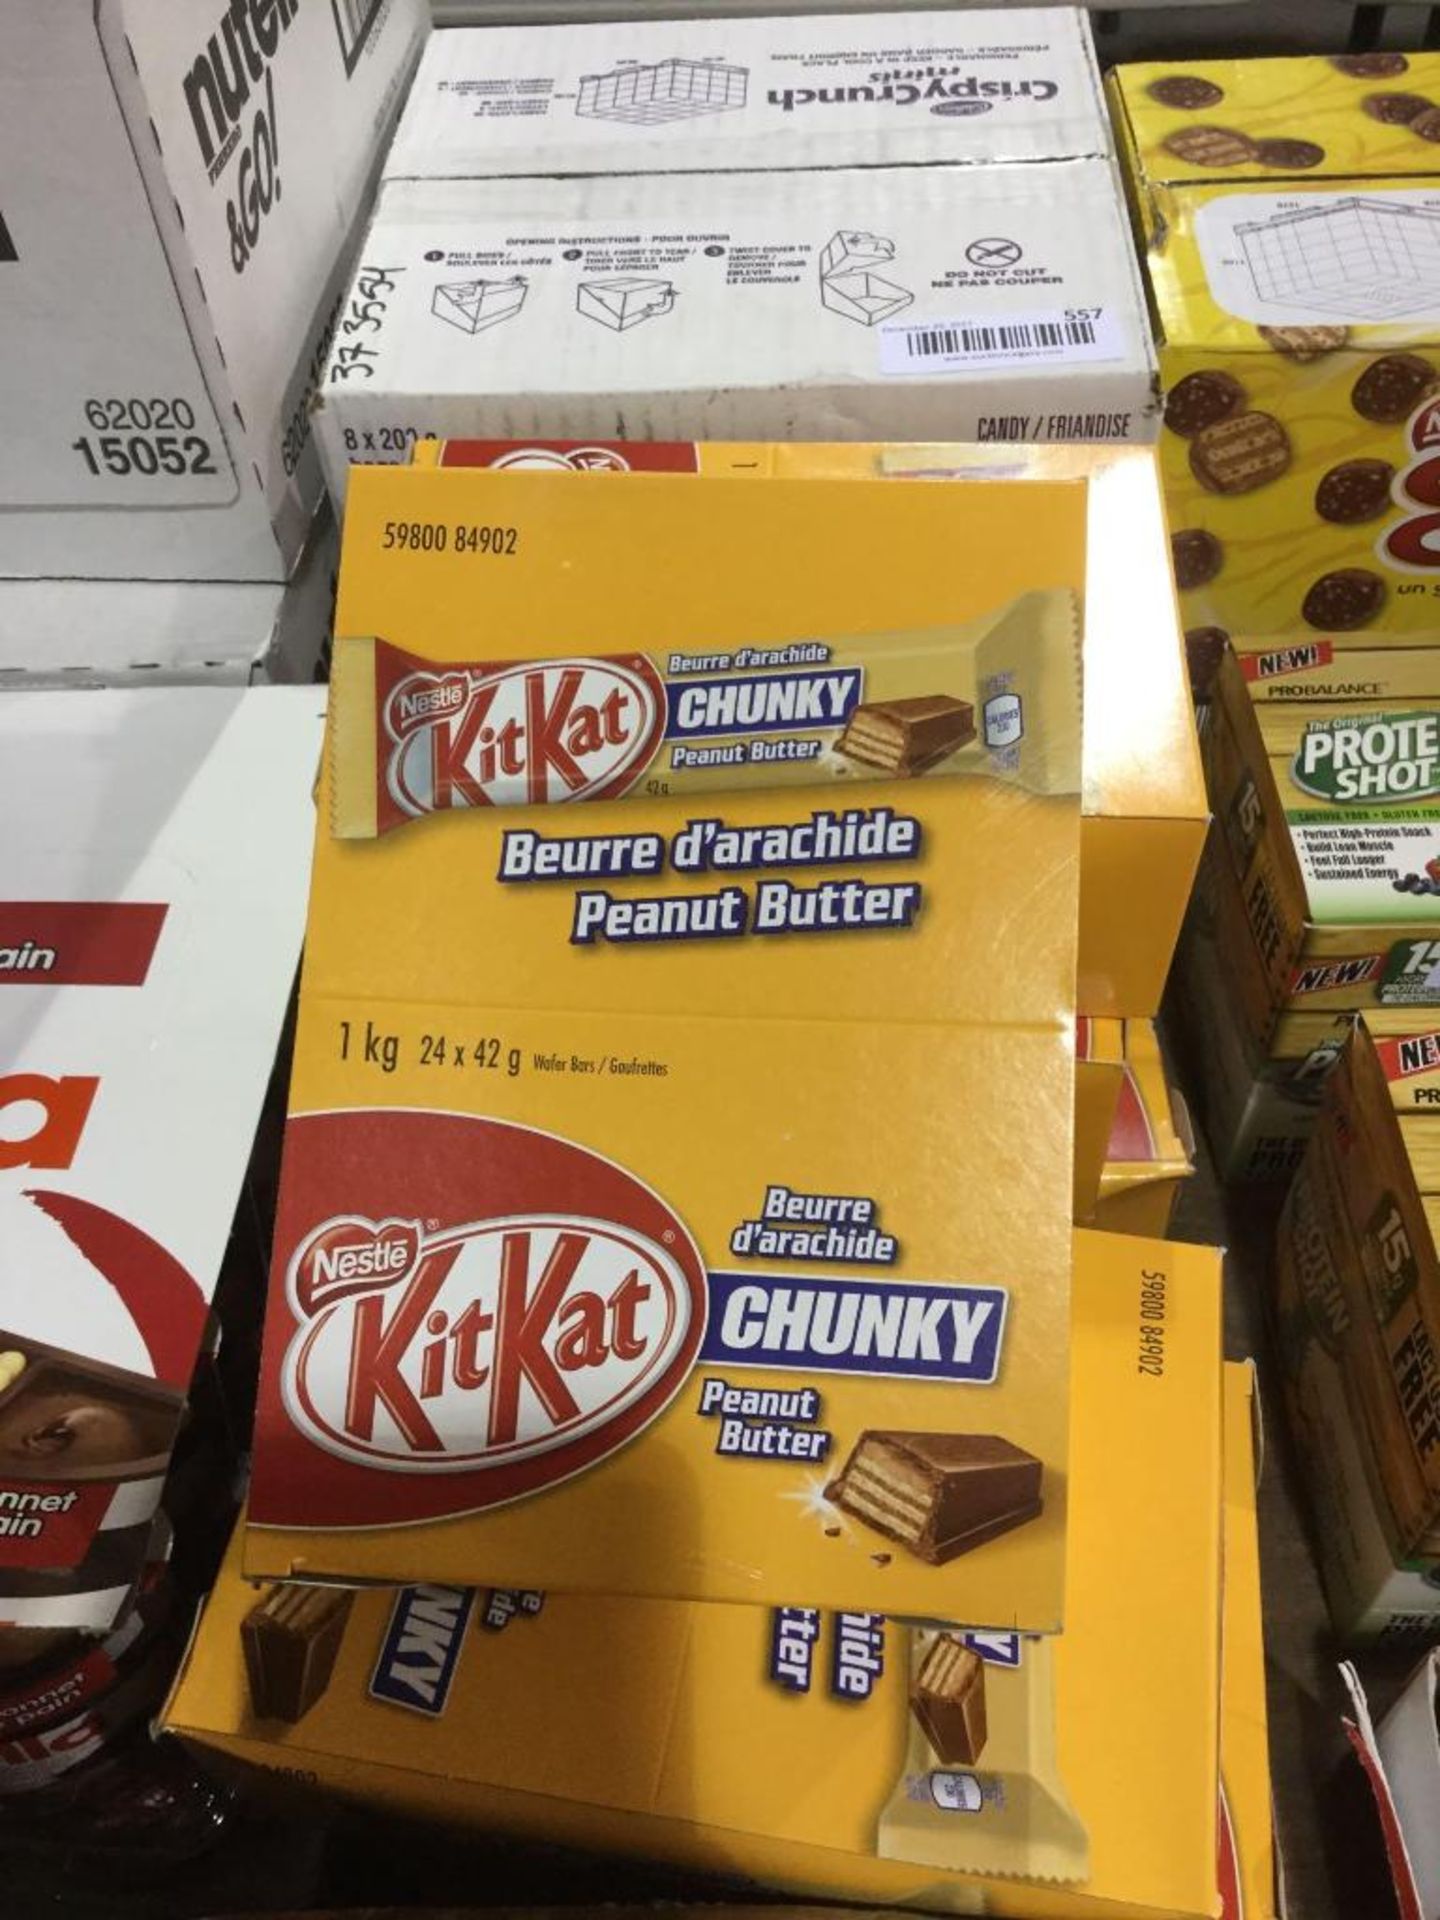 Case of 24 x 42 g KitKat Chunky Bars - Peanut butter